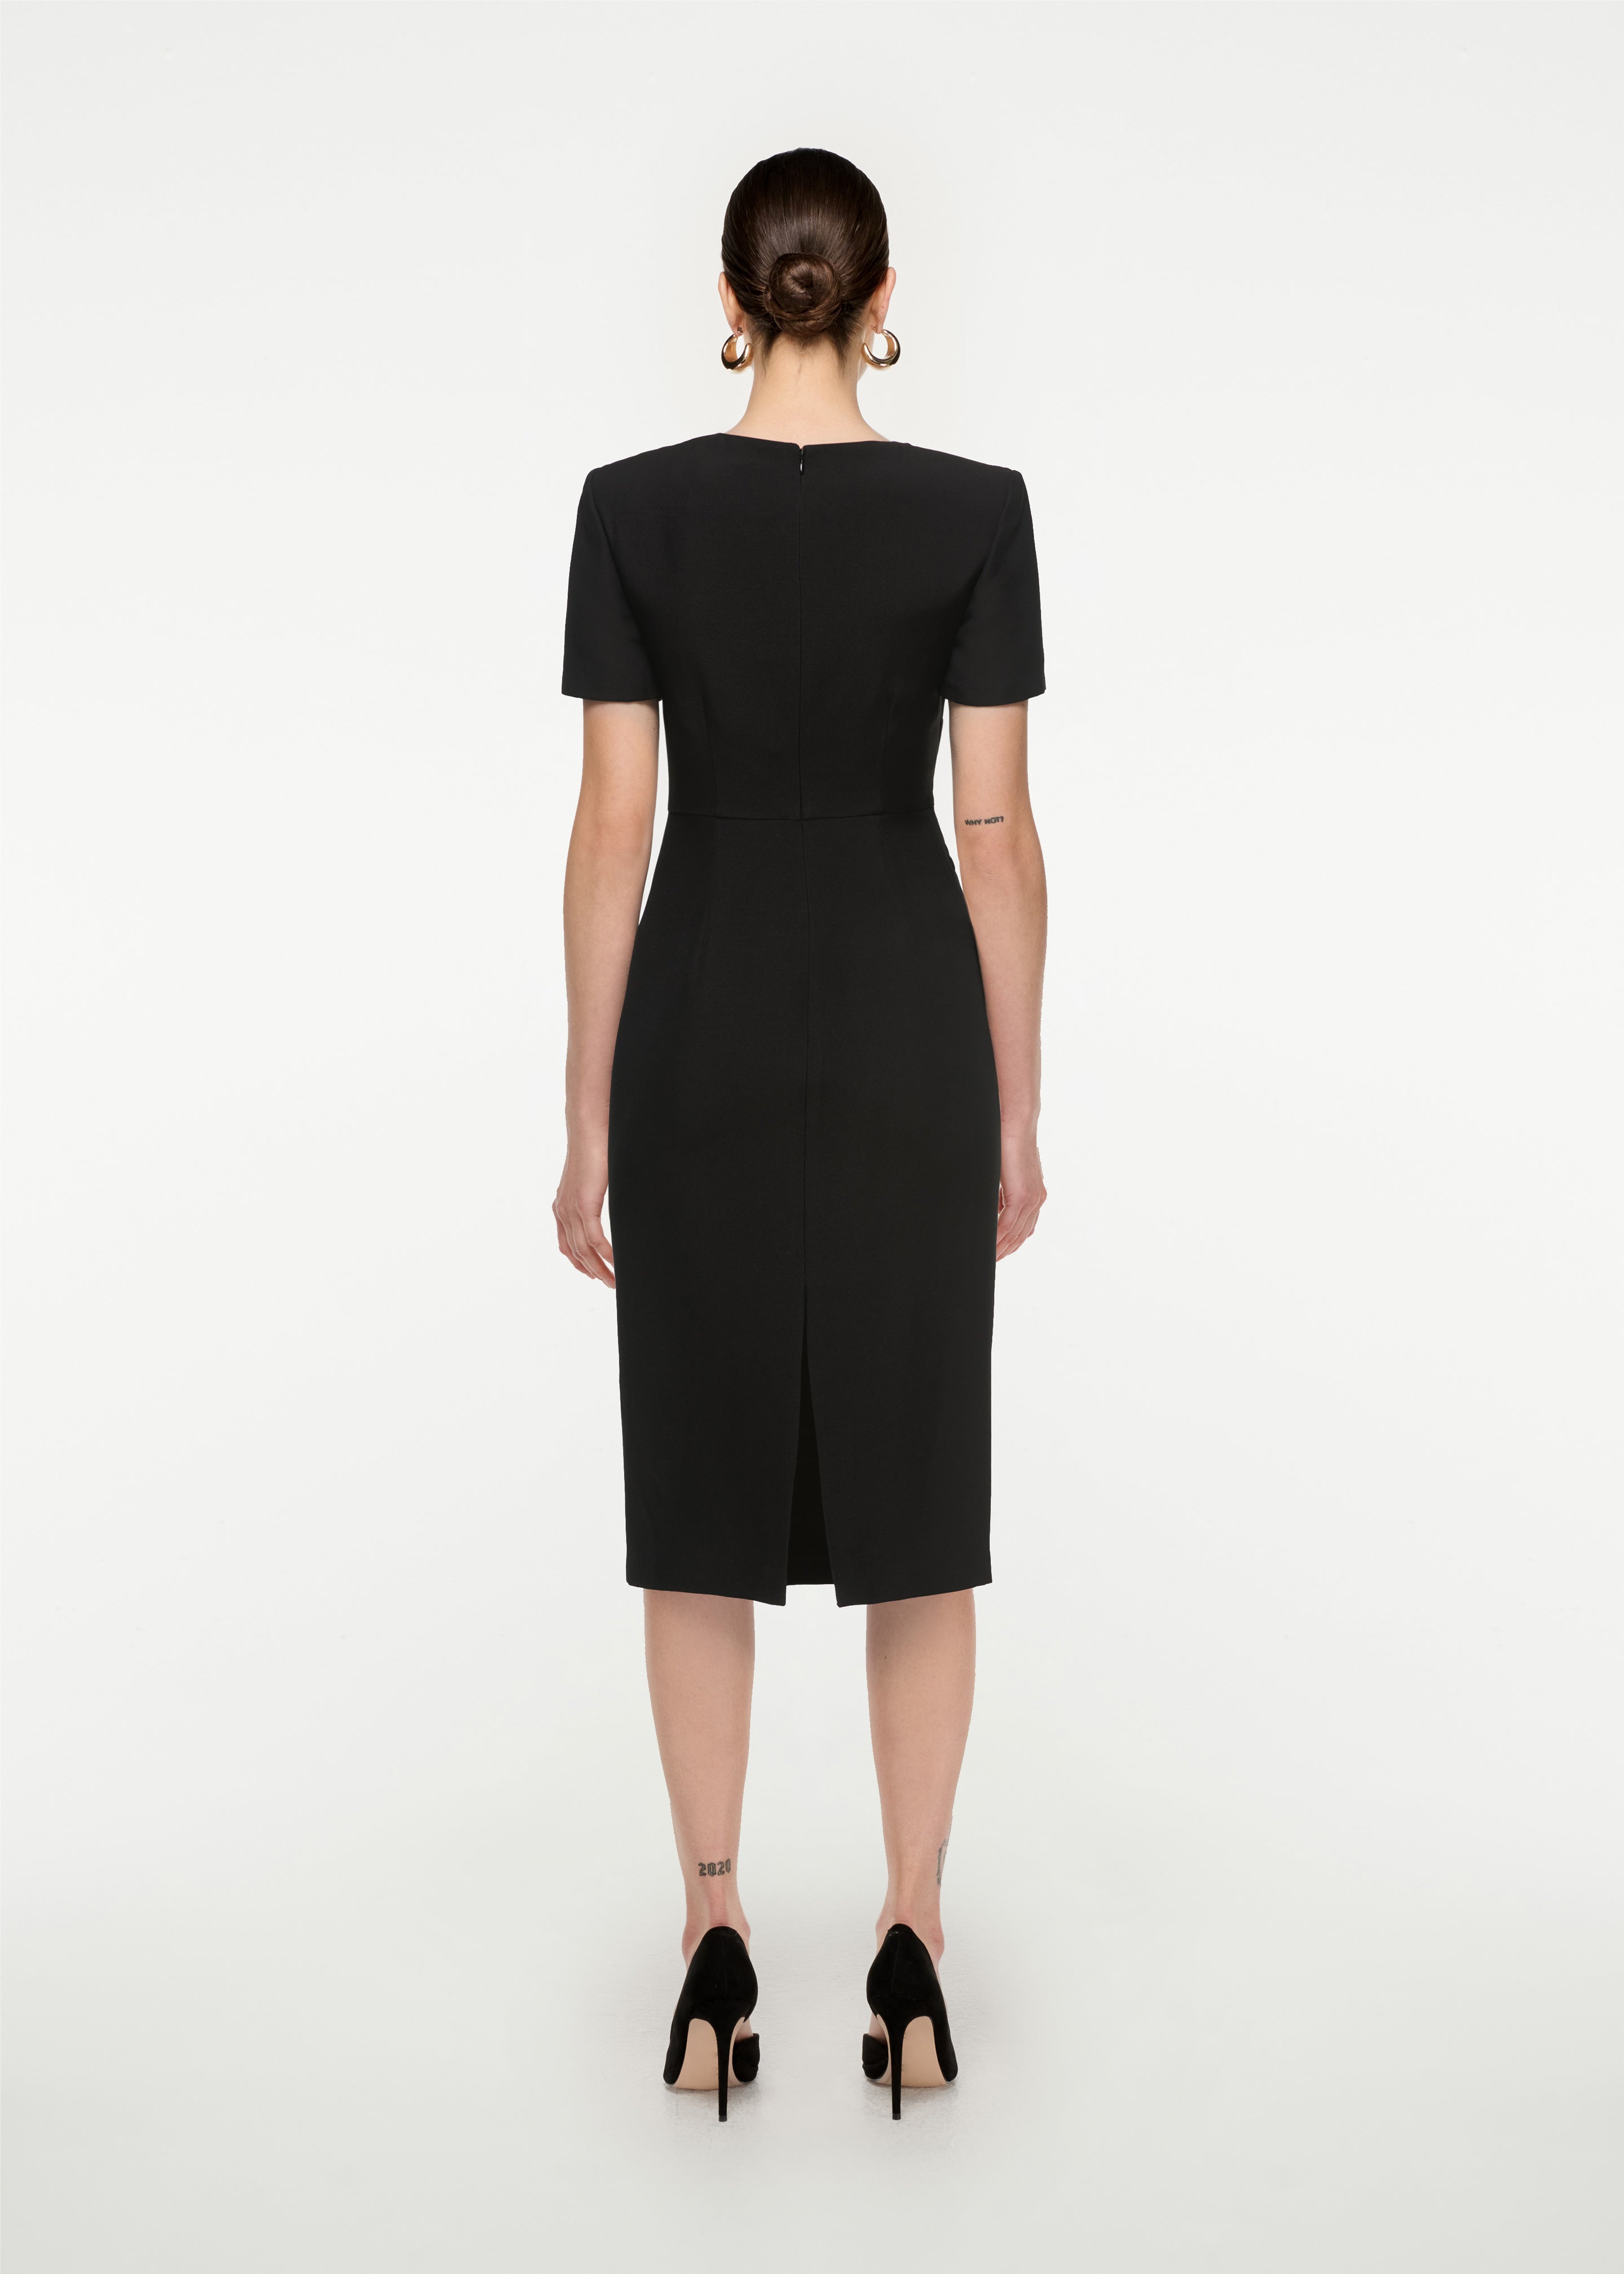 Women's Midi Dresses | Mid-length Dress | Scoop neck midi dress, Midi dress,  Black dress style